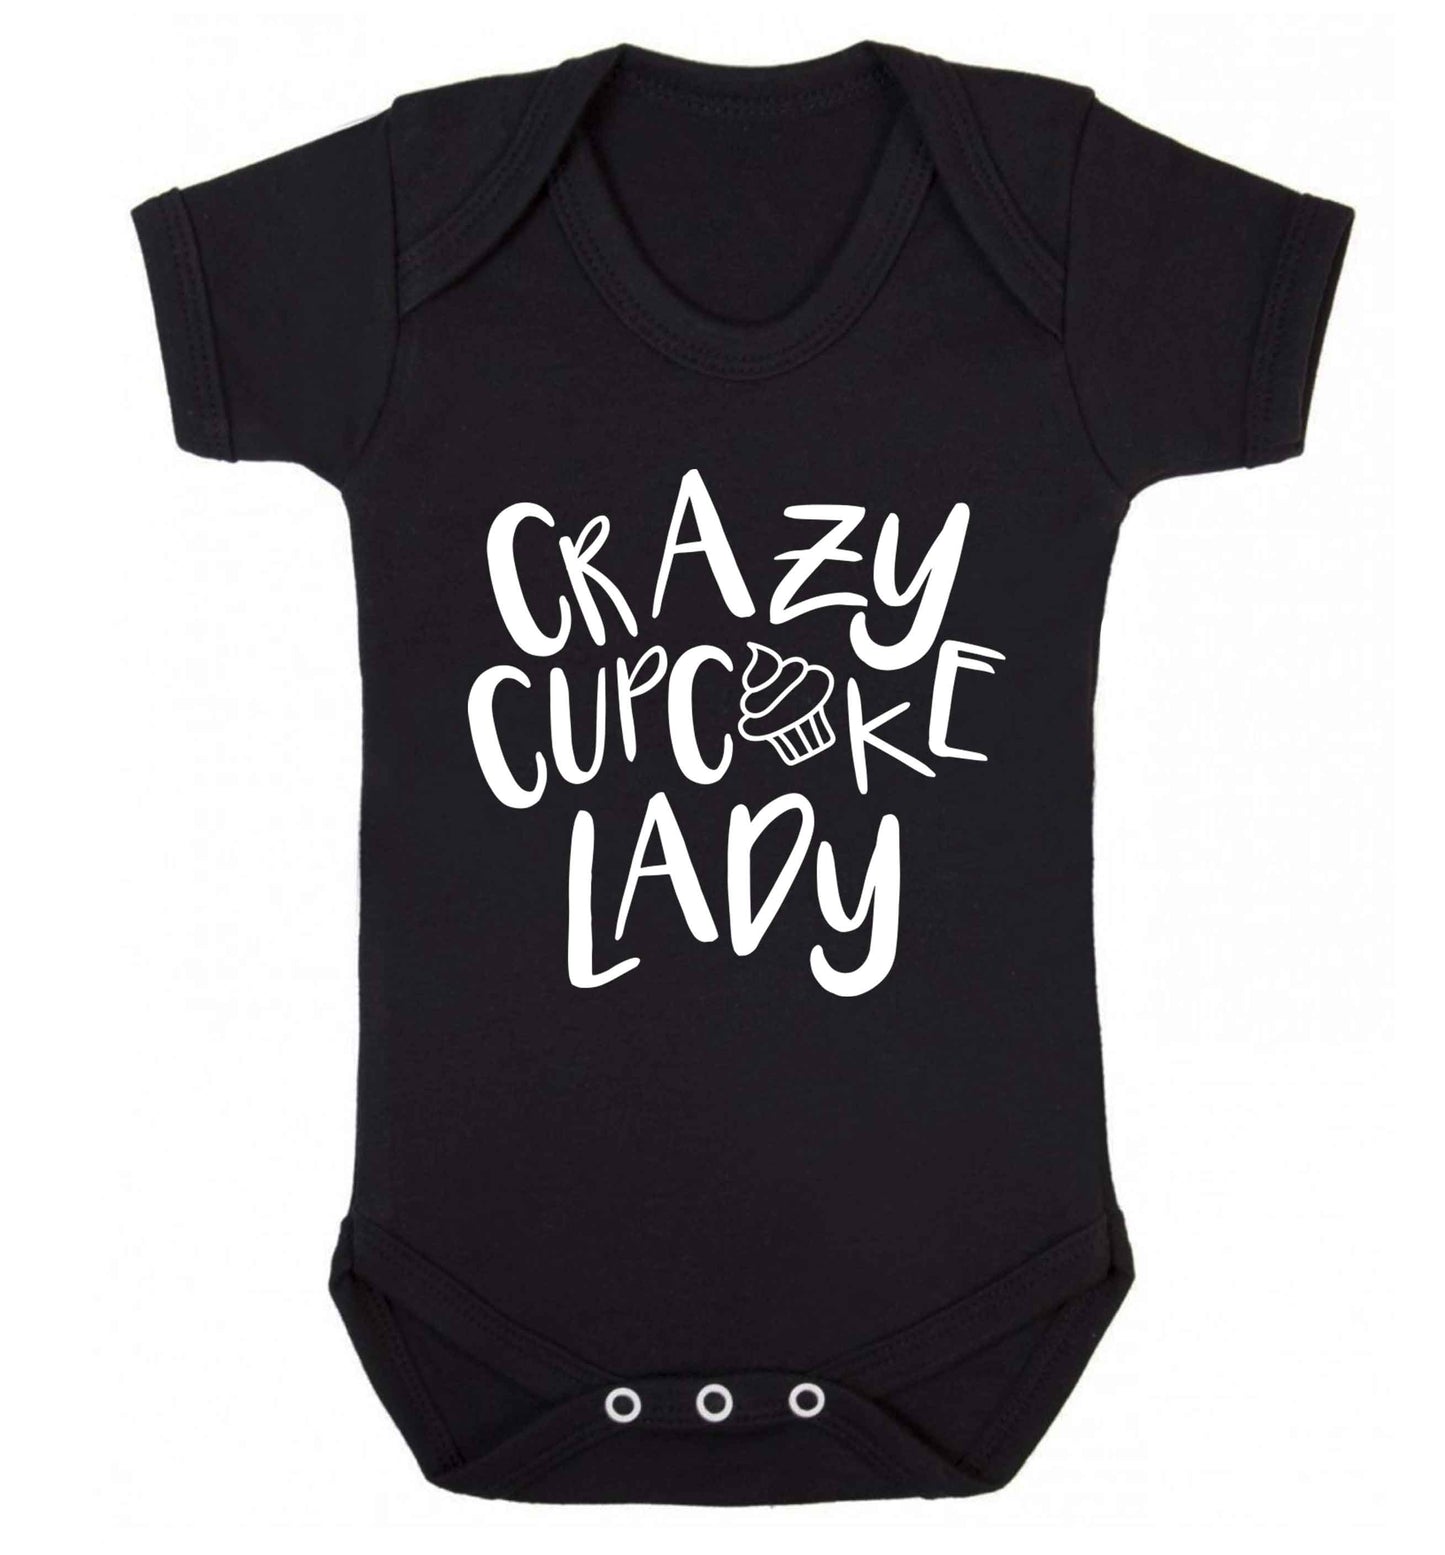 Crazy cupcake lady Baby Vest black 18-24 months